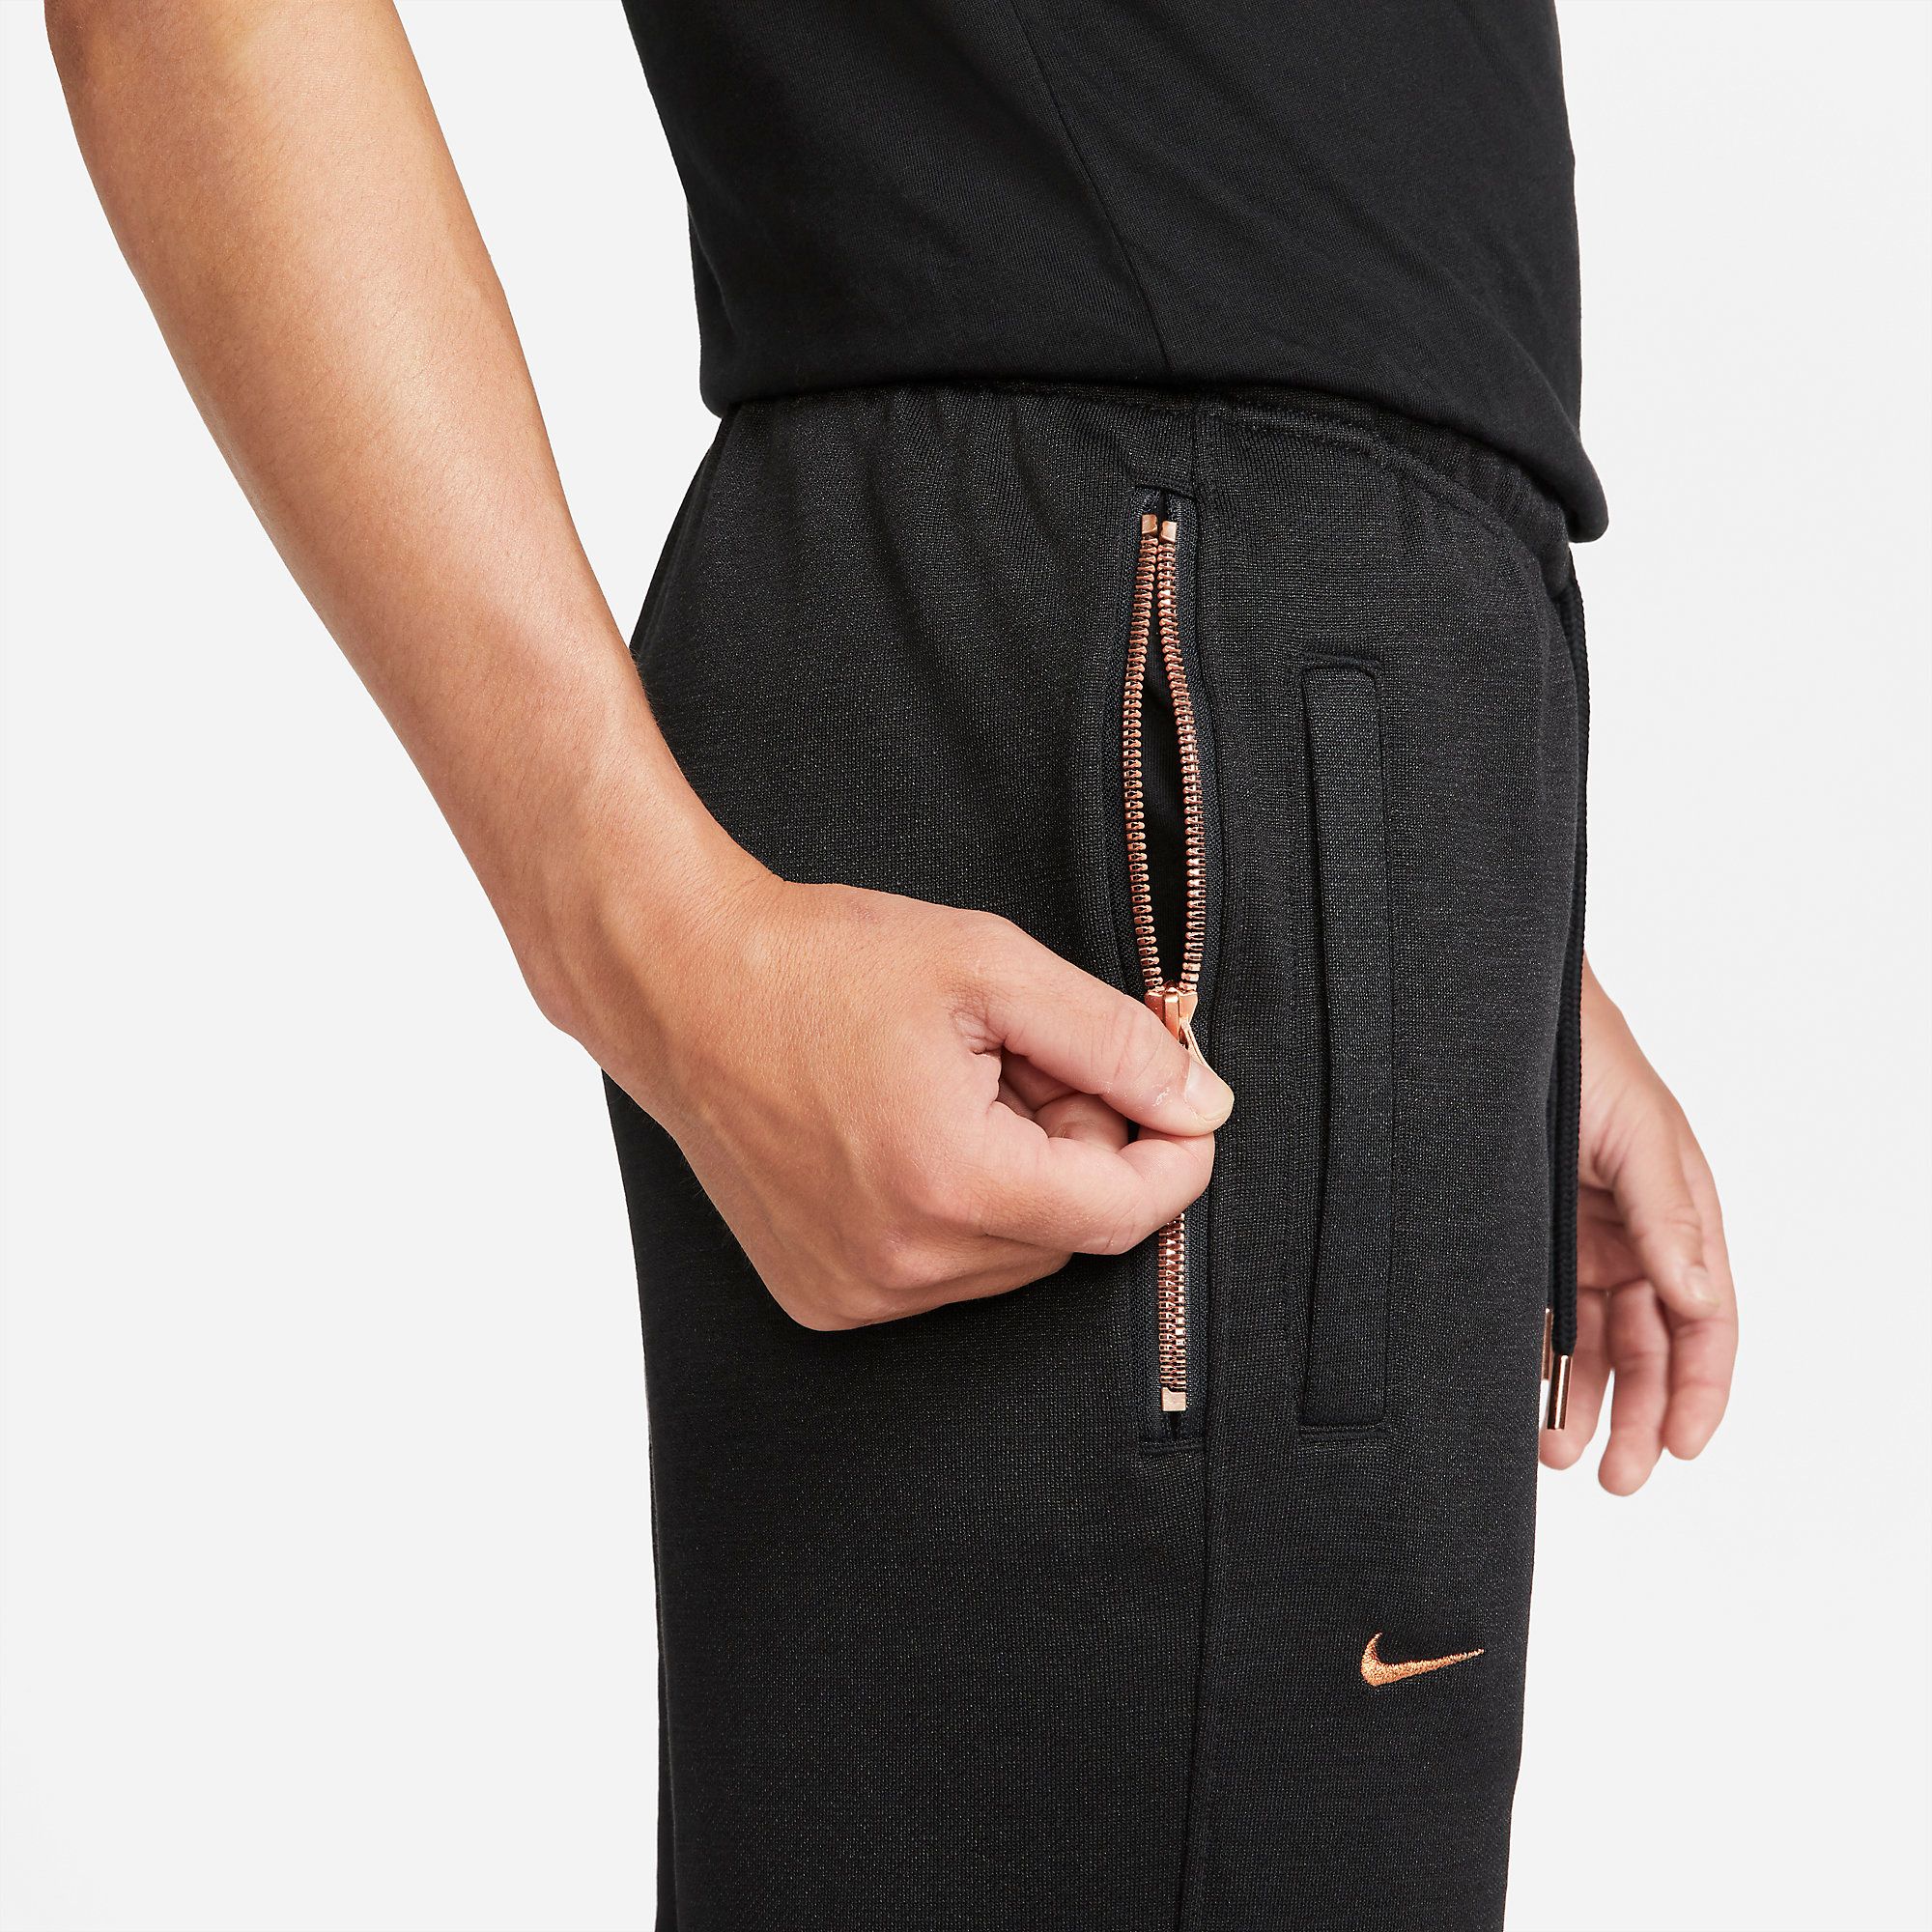  Nike Lil' Penny Premium Basketball Pants - Black 